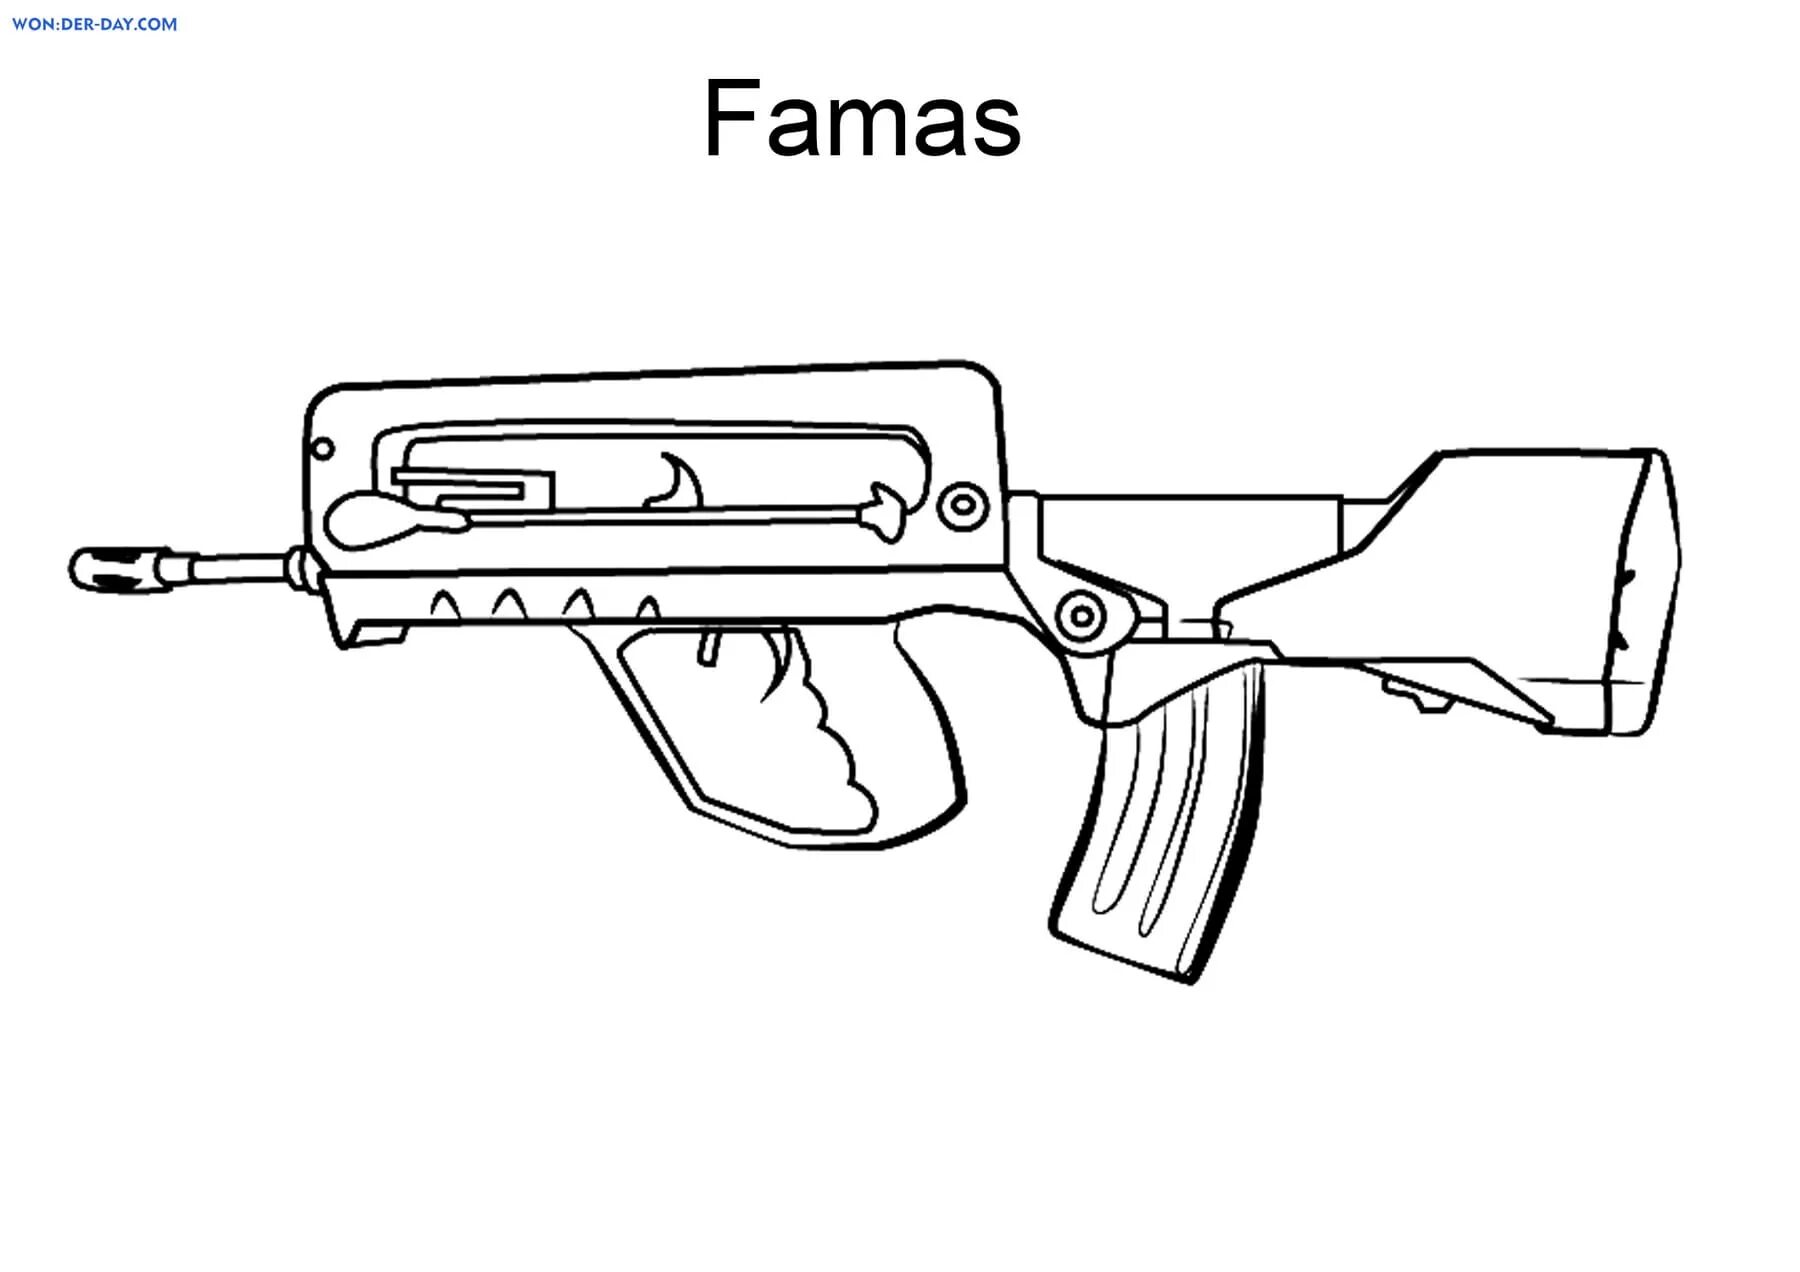 Фамас автомат чертёж. Фамас из стандофф 2 чертеж. Фамас КС го чертеж. Фамас оружие. Раскраска стандофф оружие